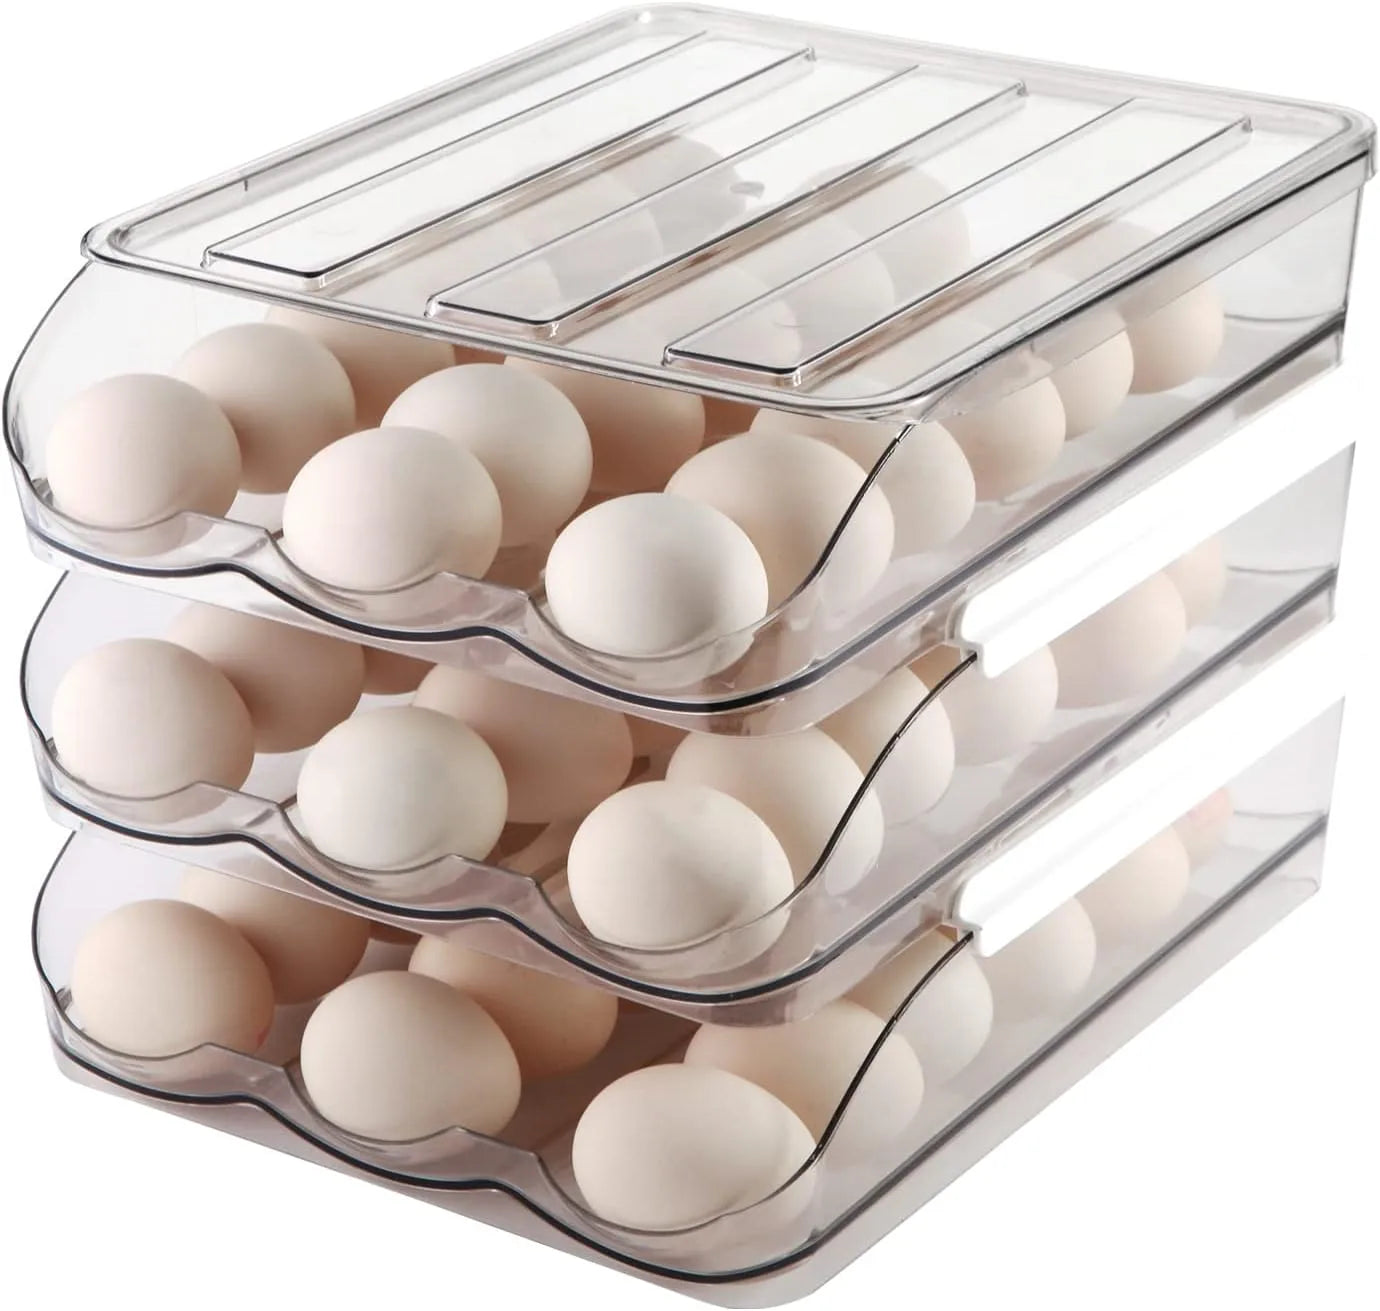 Egg Holder Transparent 3 Layers